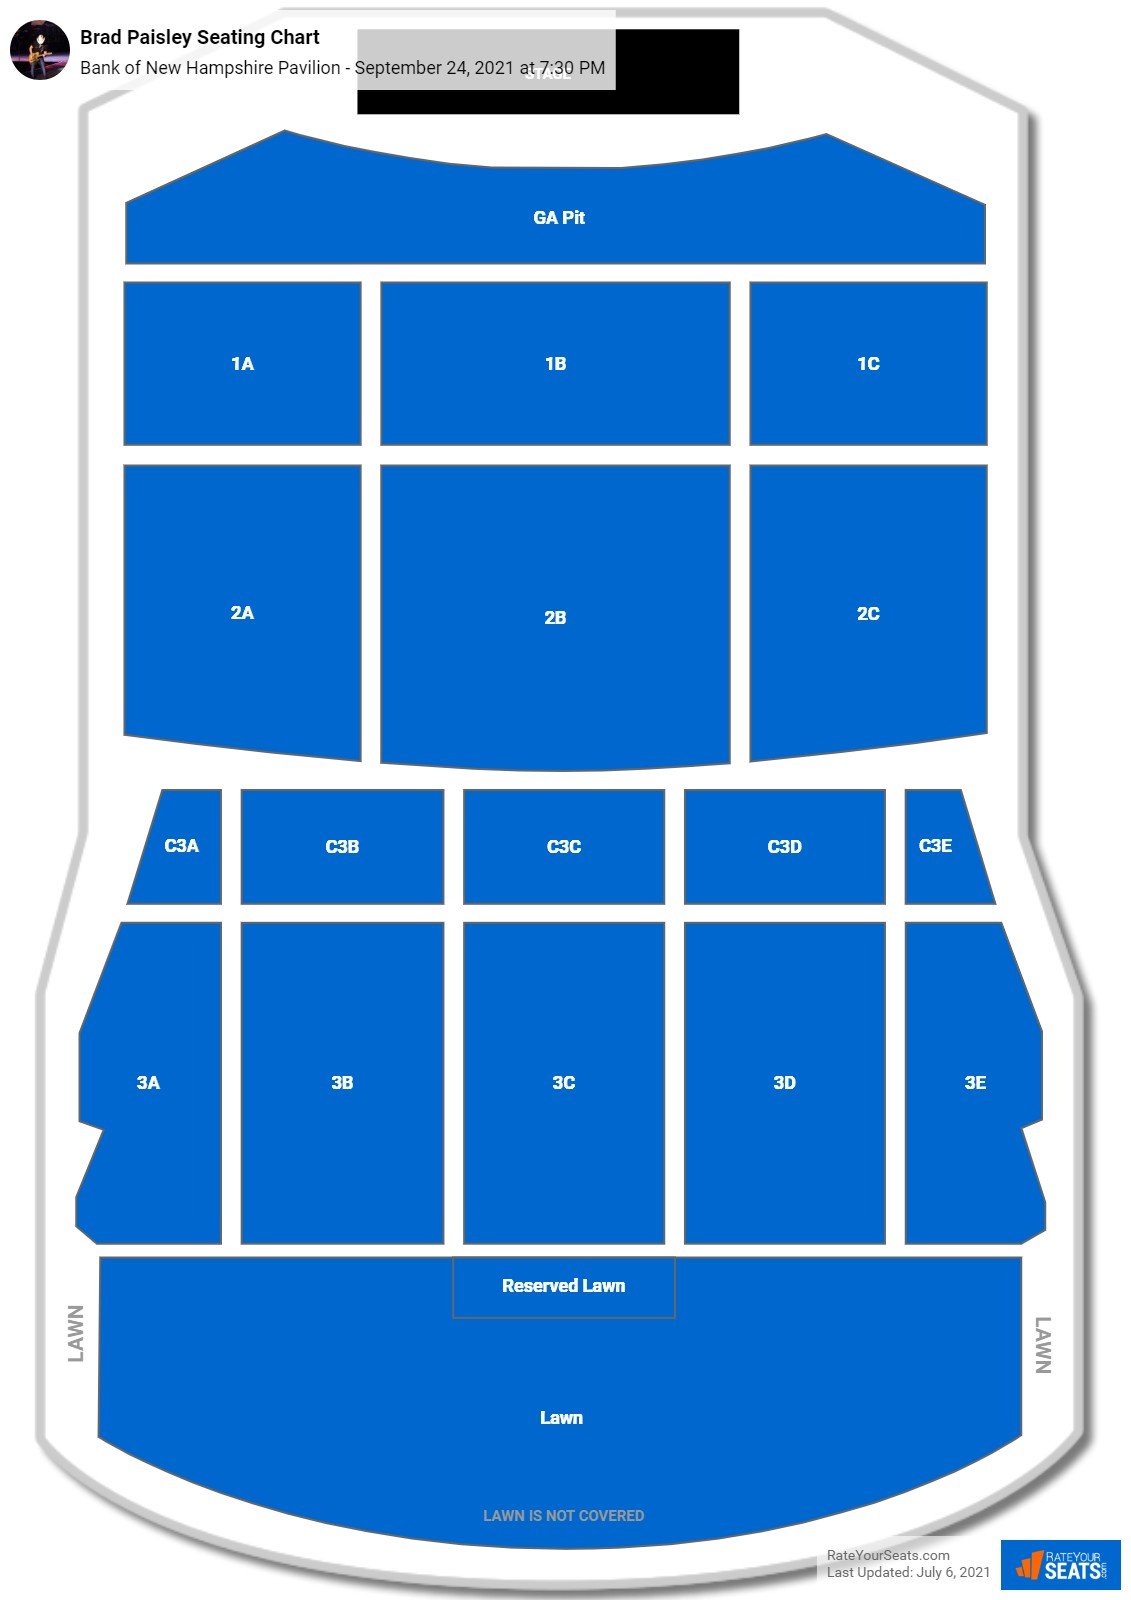 Usd Craig Pavilion Seating Chart